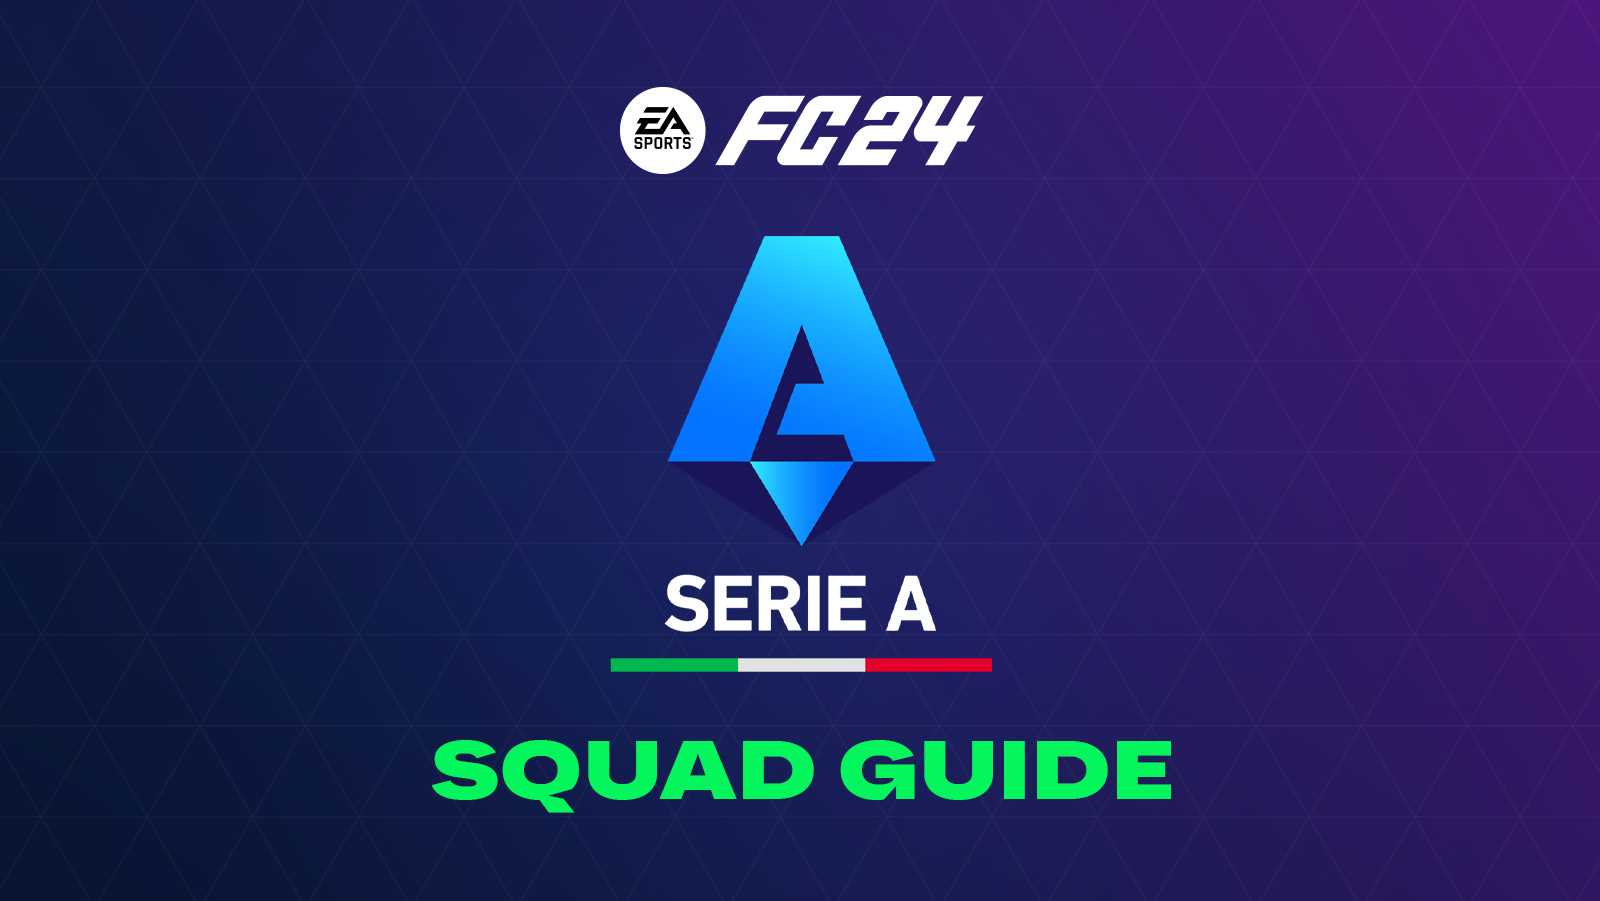 FC 24 Serie A Squad Guide